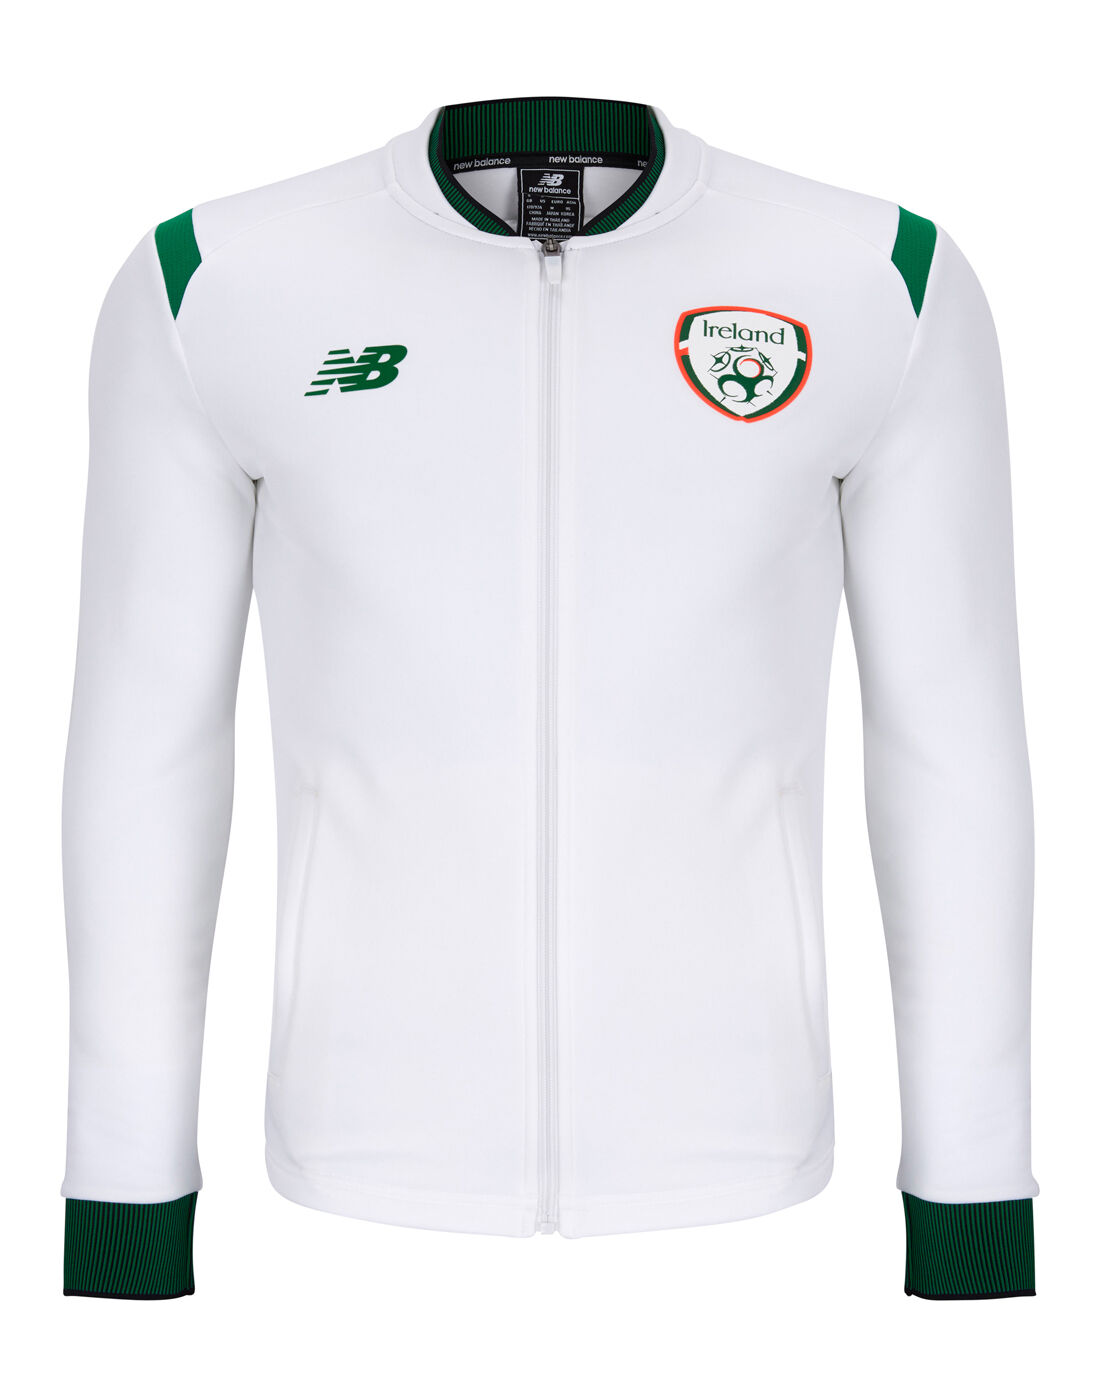 new balance team ireland jacket